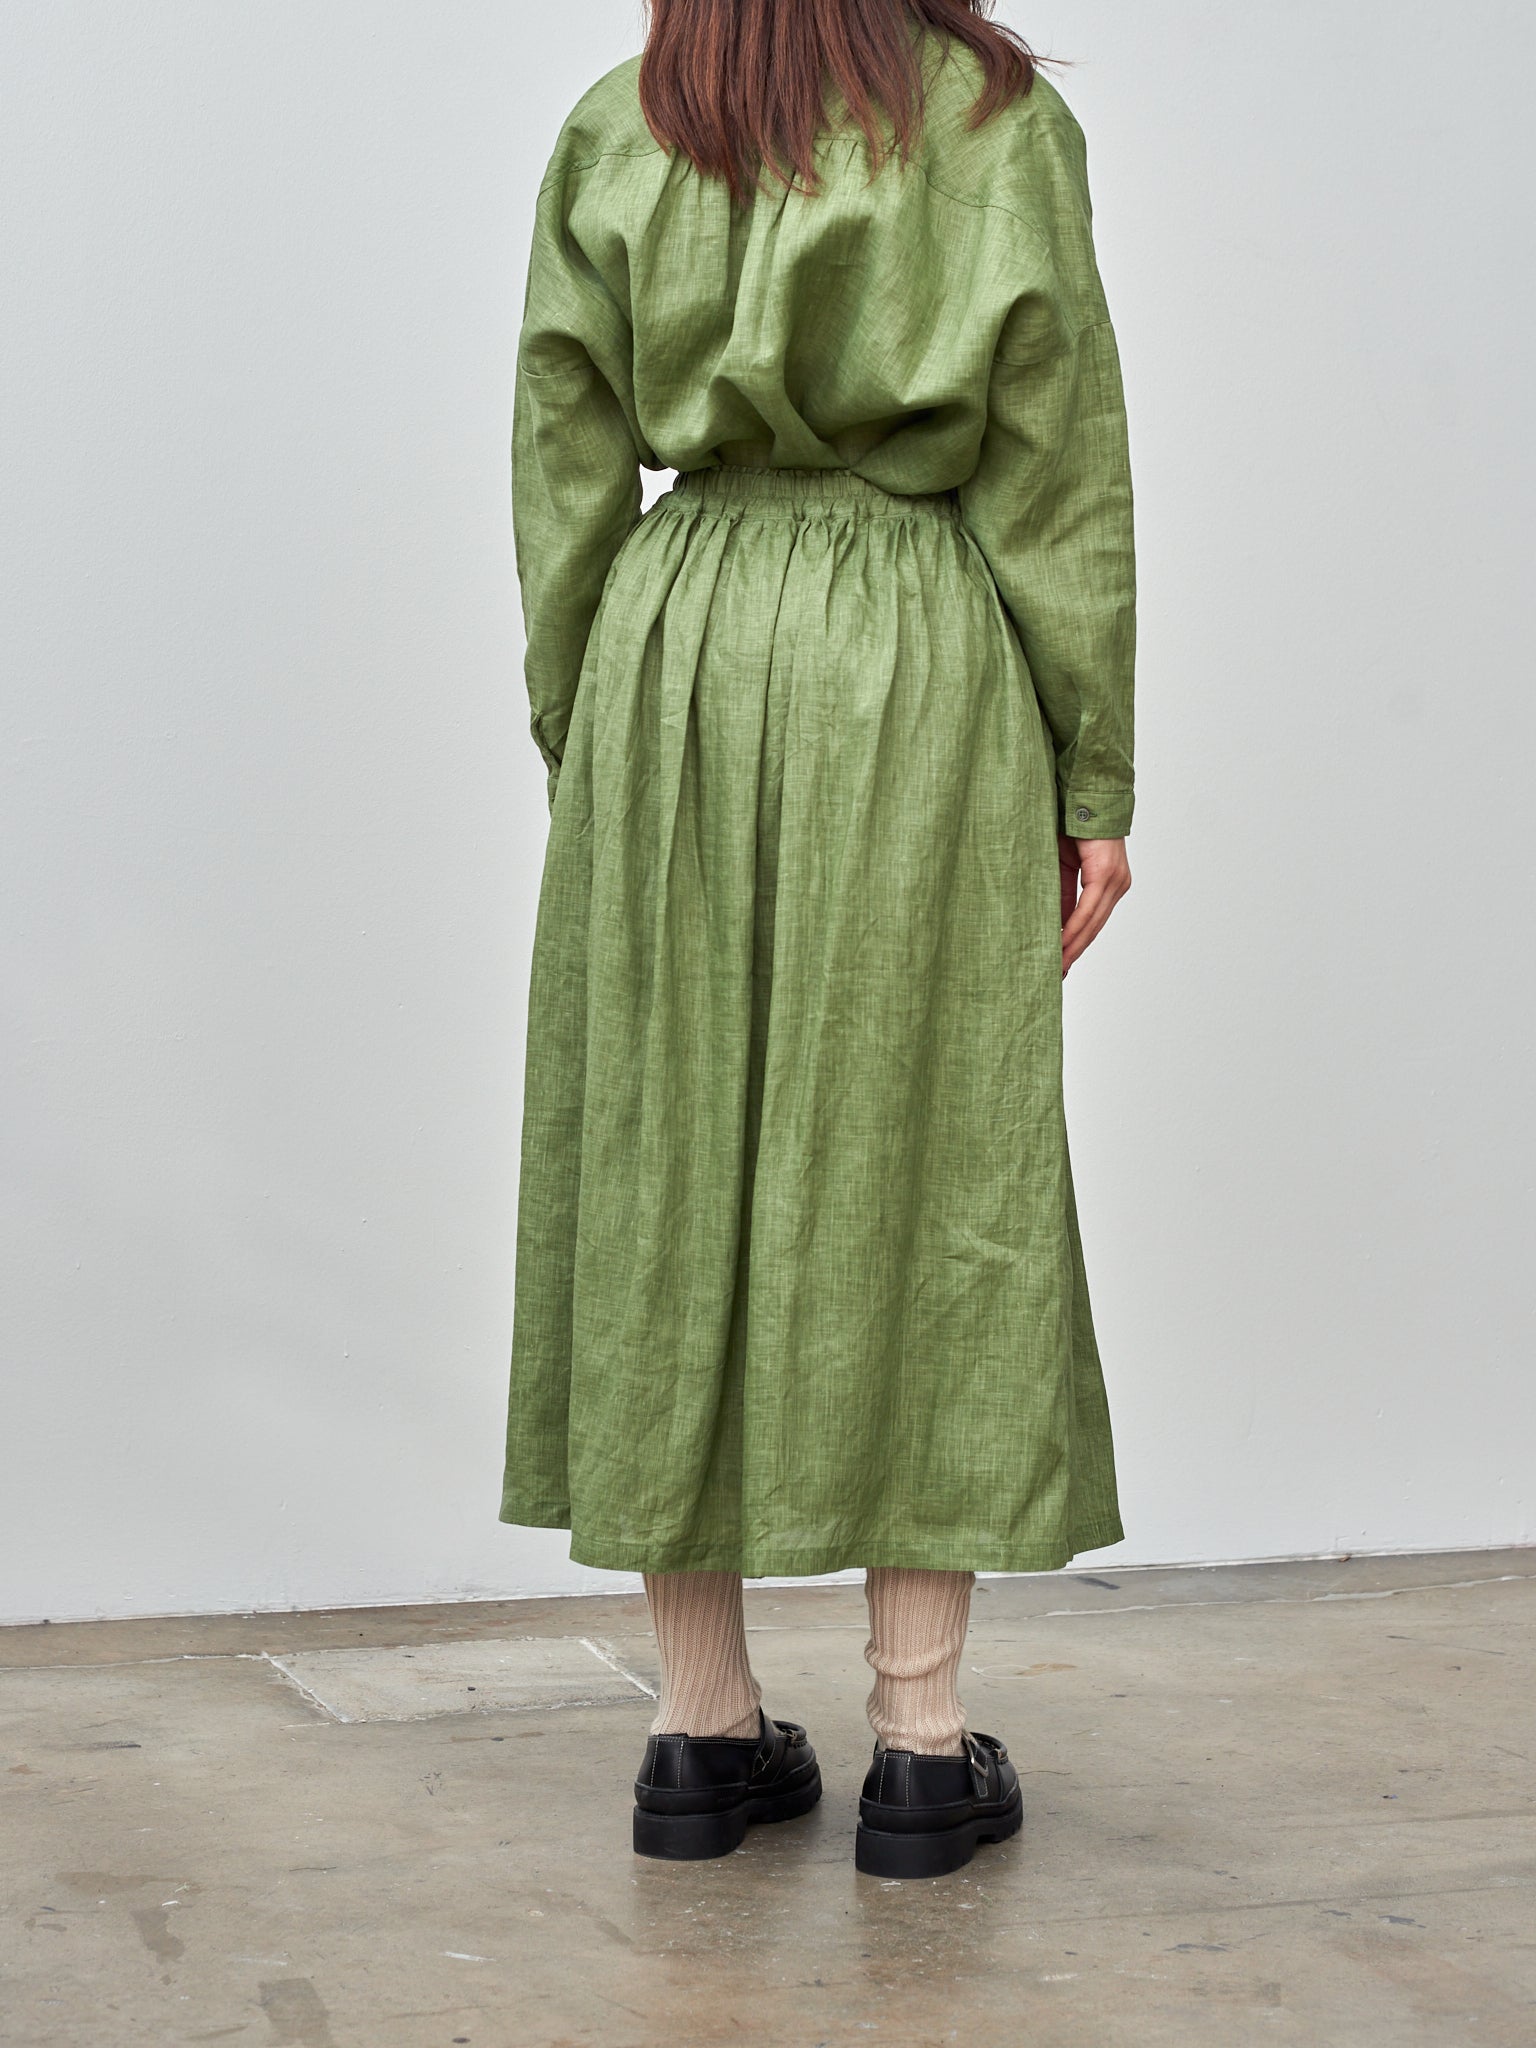 Namu Shop - Ichi Pigment Color Linen Skirt - Green